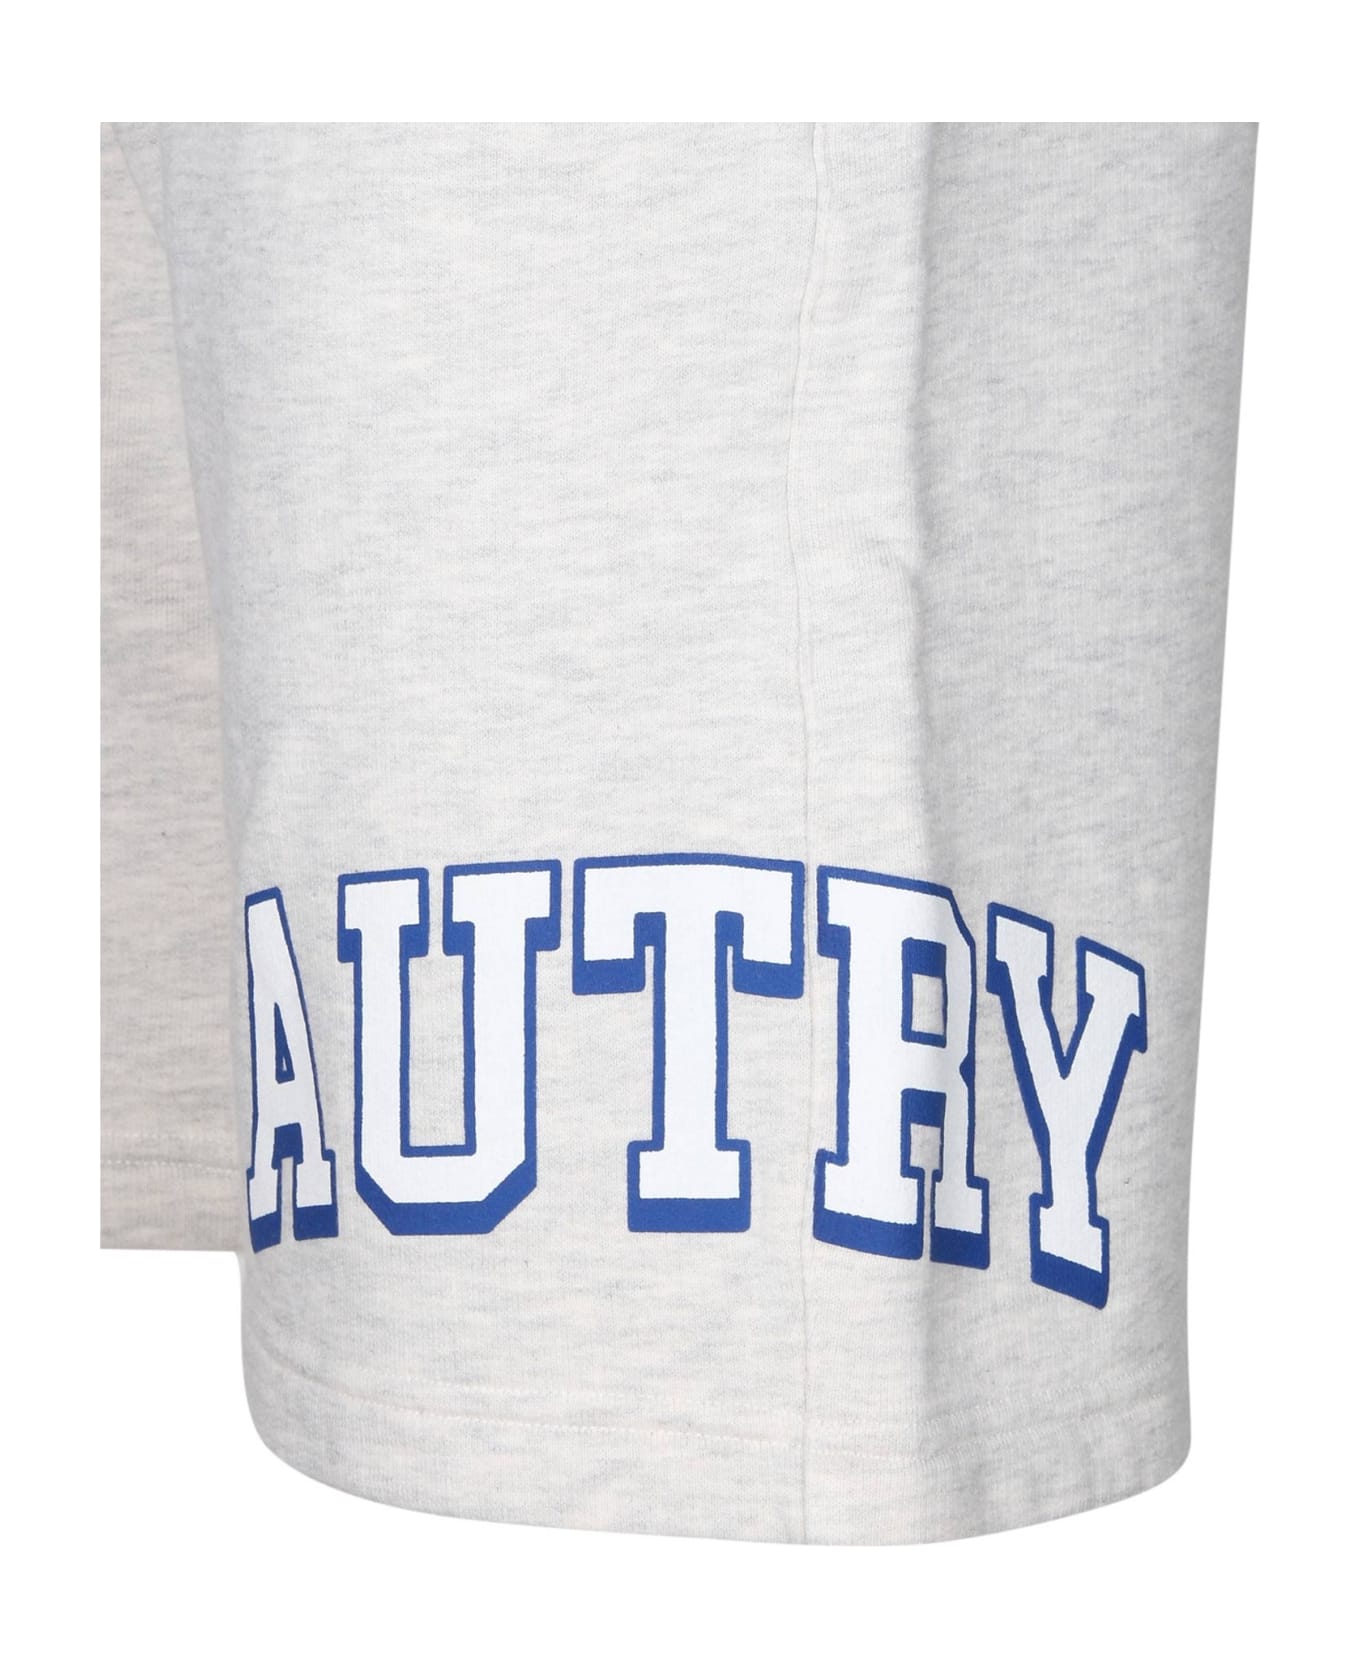 Autry Shorts In Melange Gray Cotton Sweatshirt - MELANGE